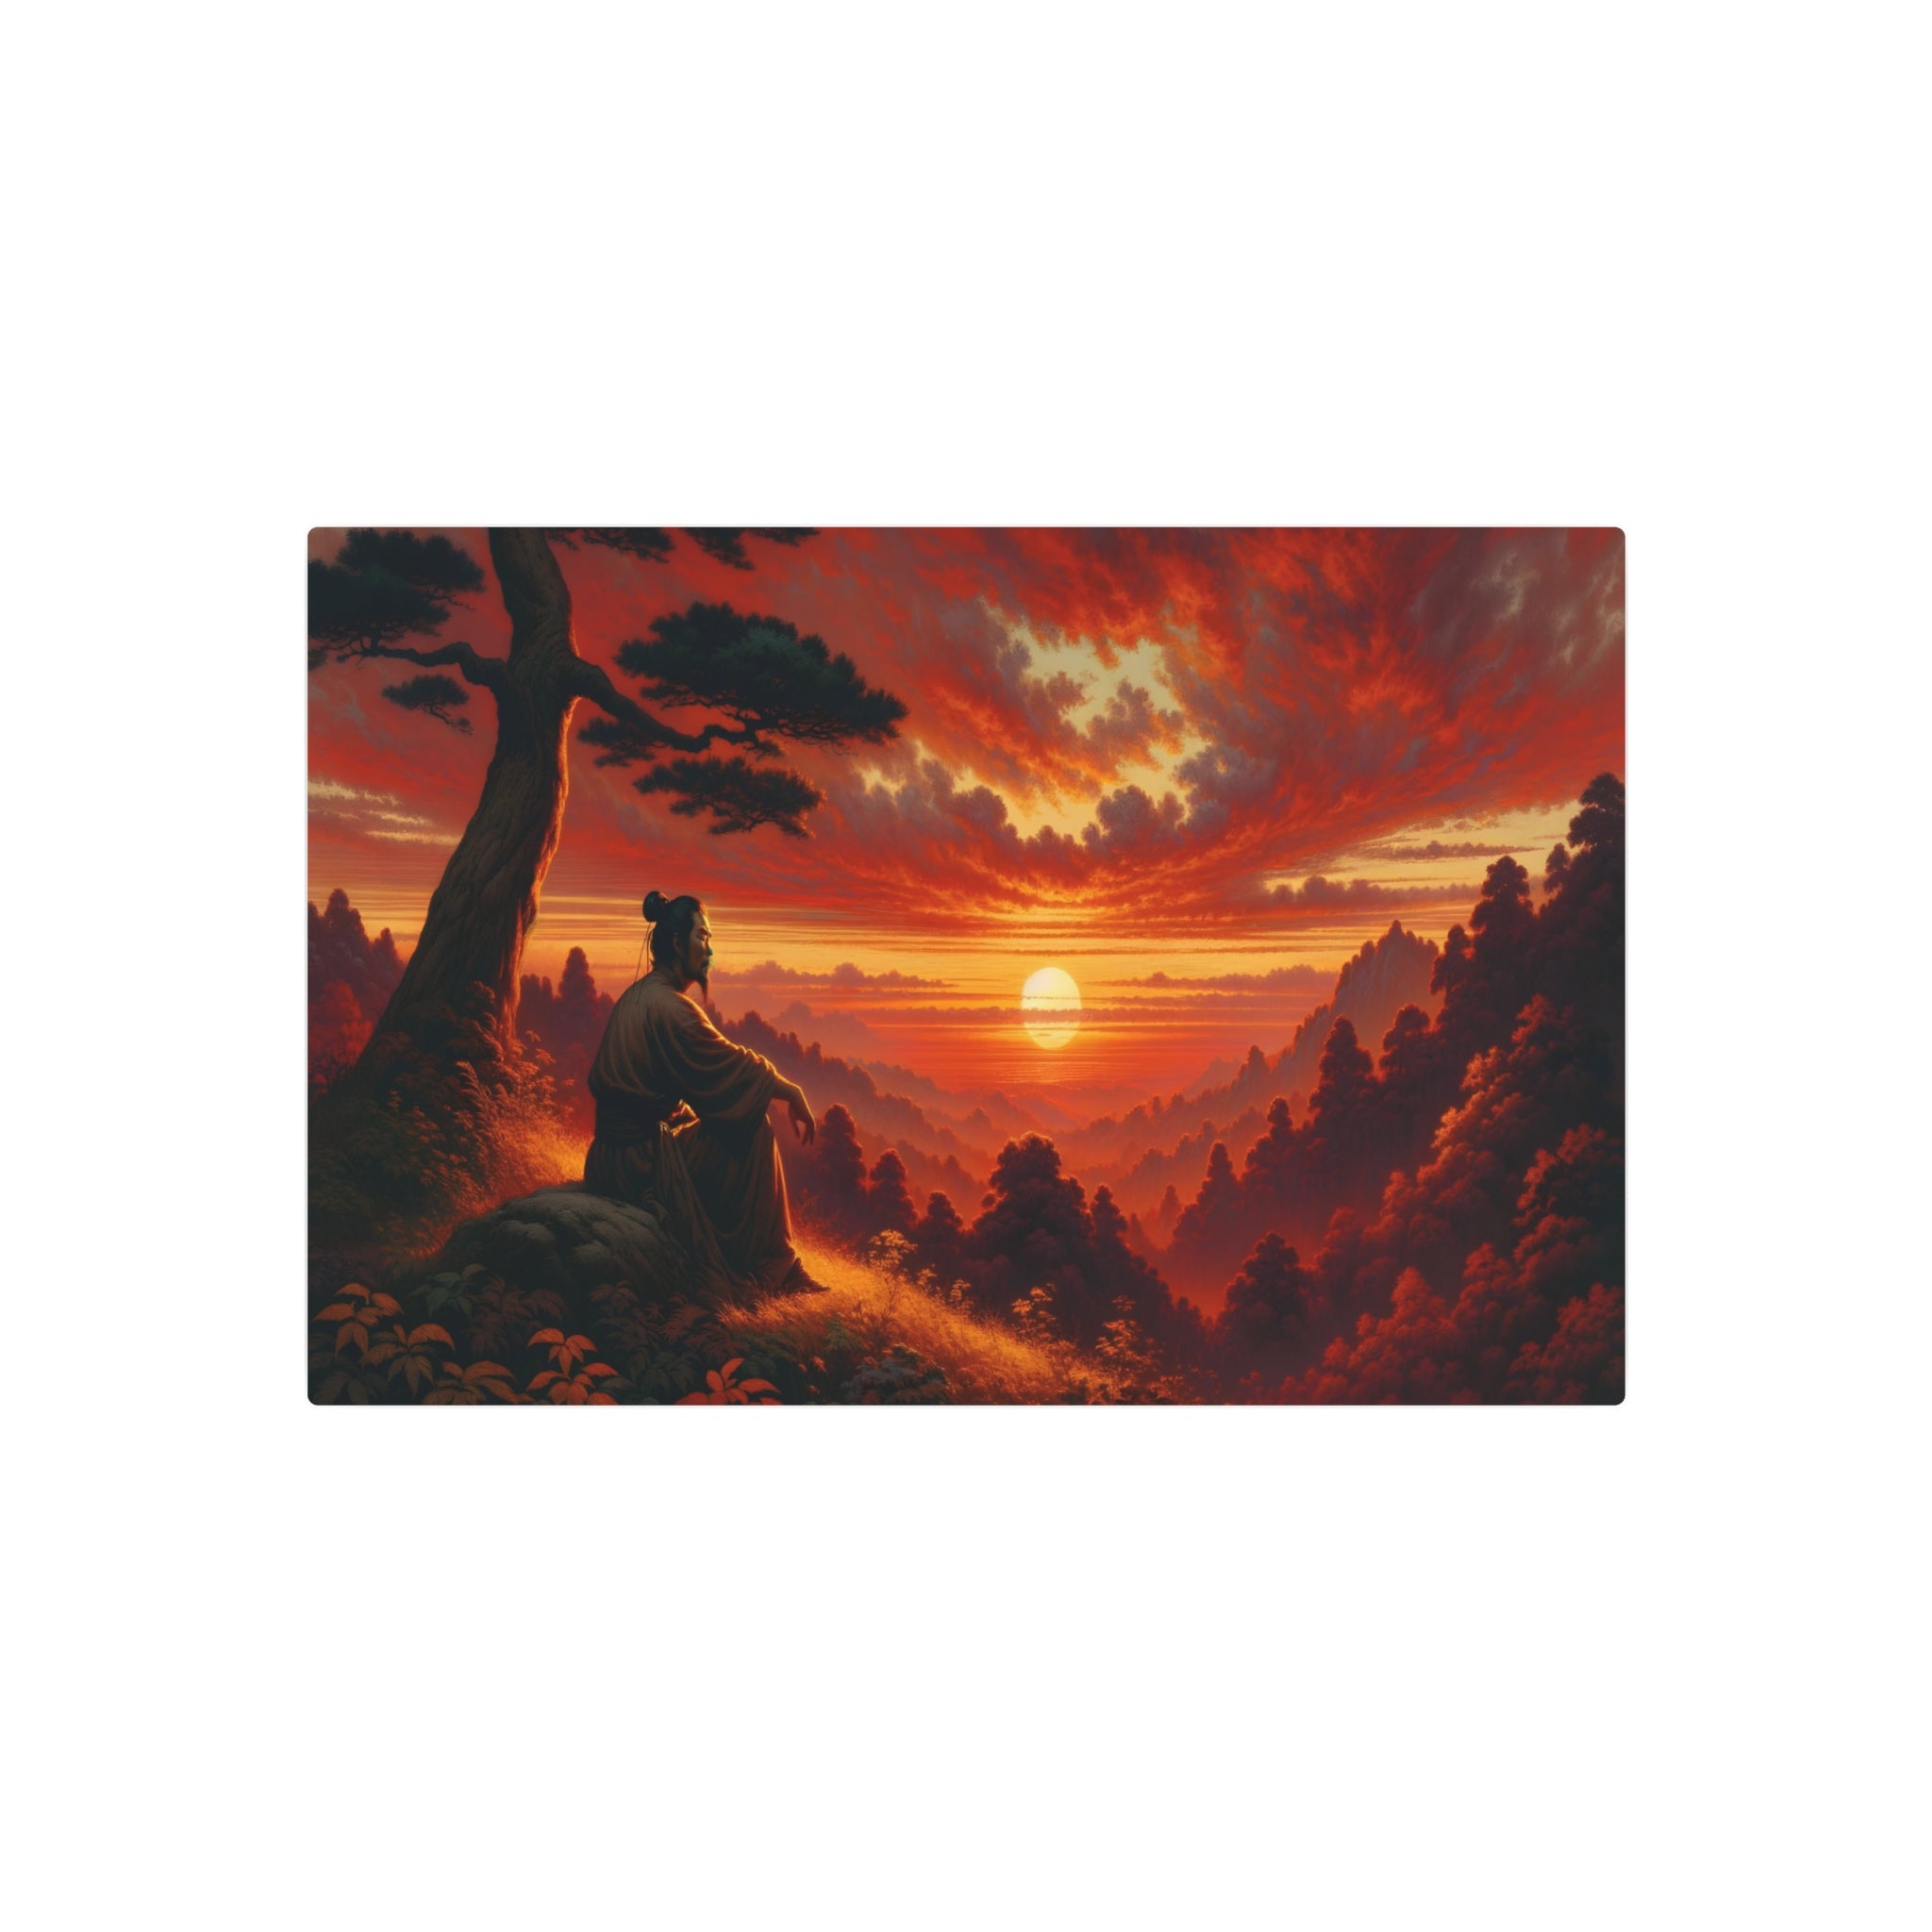 Metal Poster Art |  Romanticism Inspired Art Piece: Man Contemplating Nature in Beautiful Sunset - Western Art Styles"